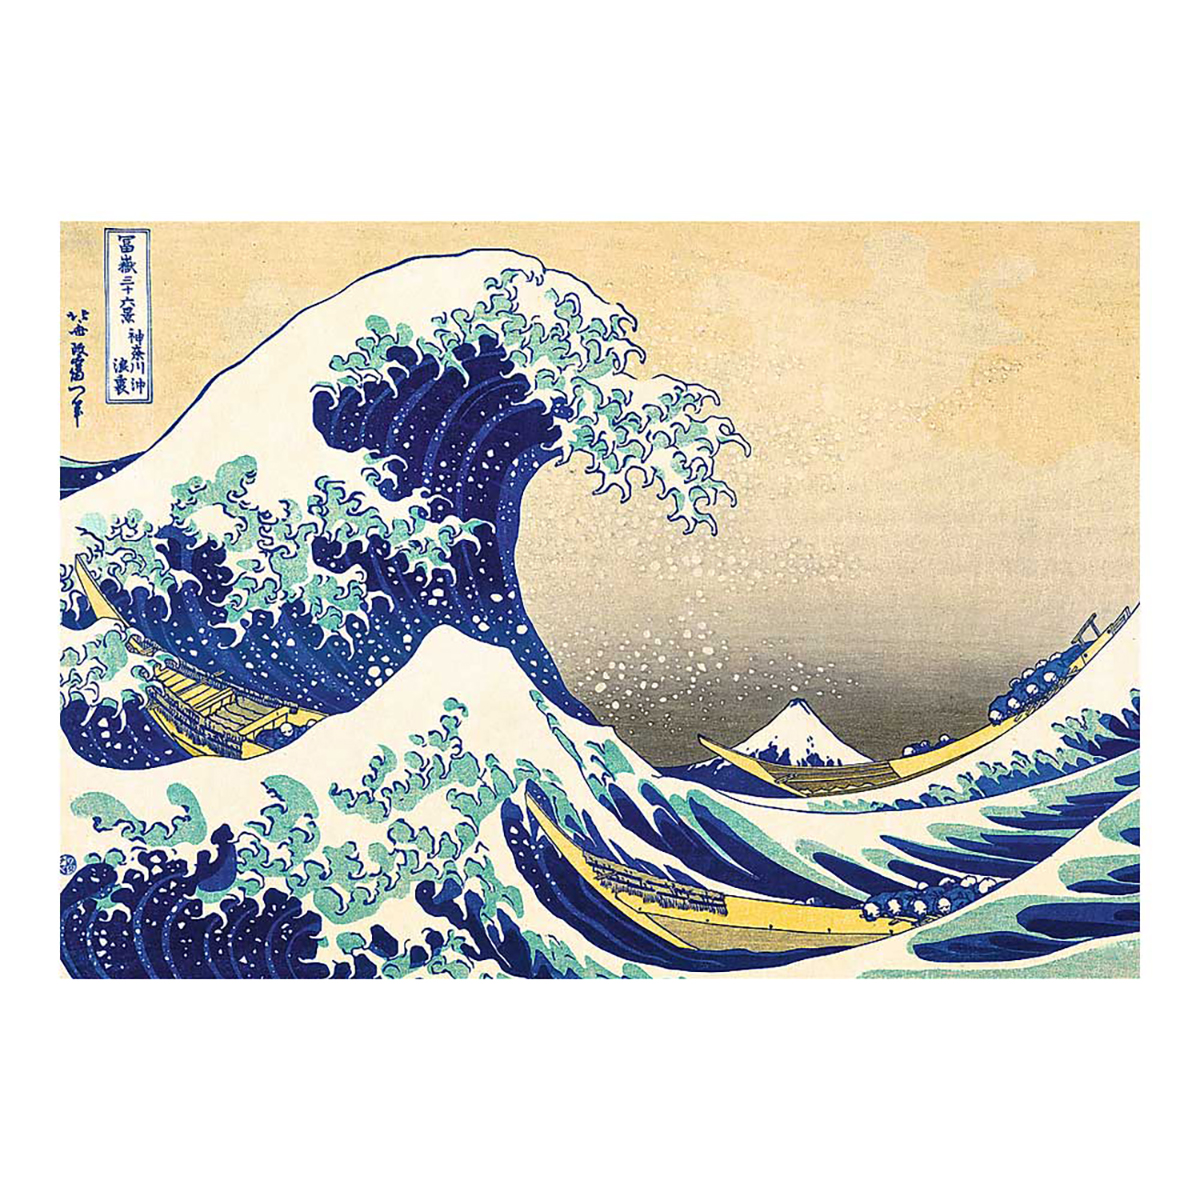 TREFL Hokusai Welle Die große Katsushika: Puzzle Kanagawa von